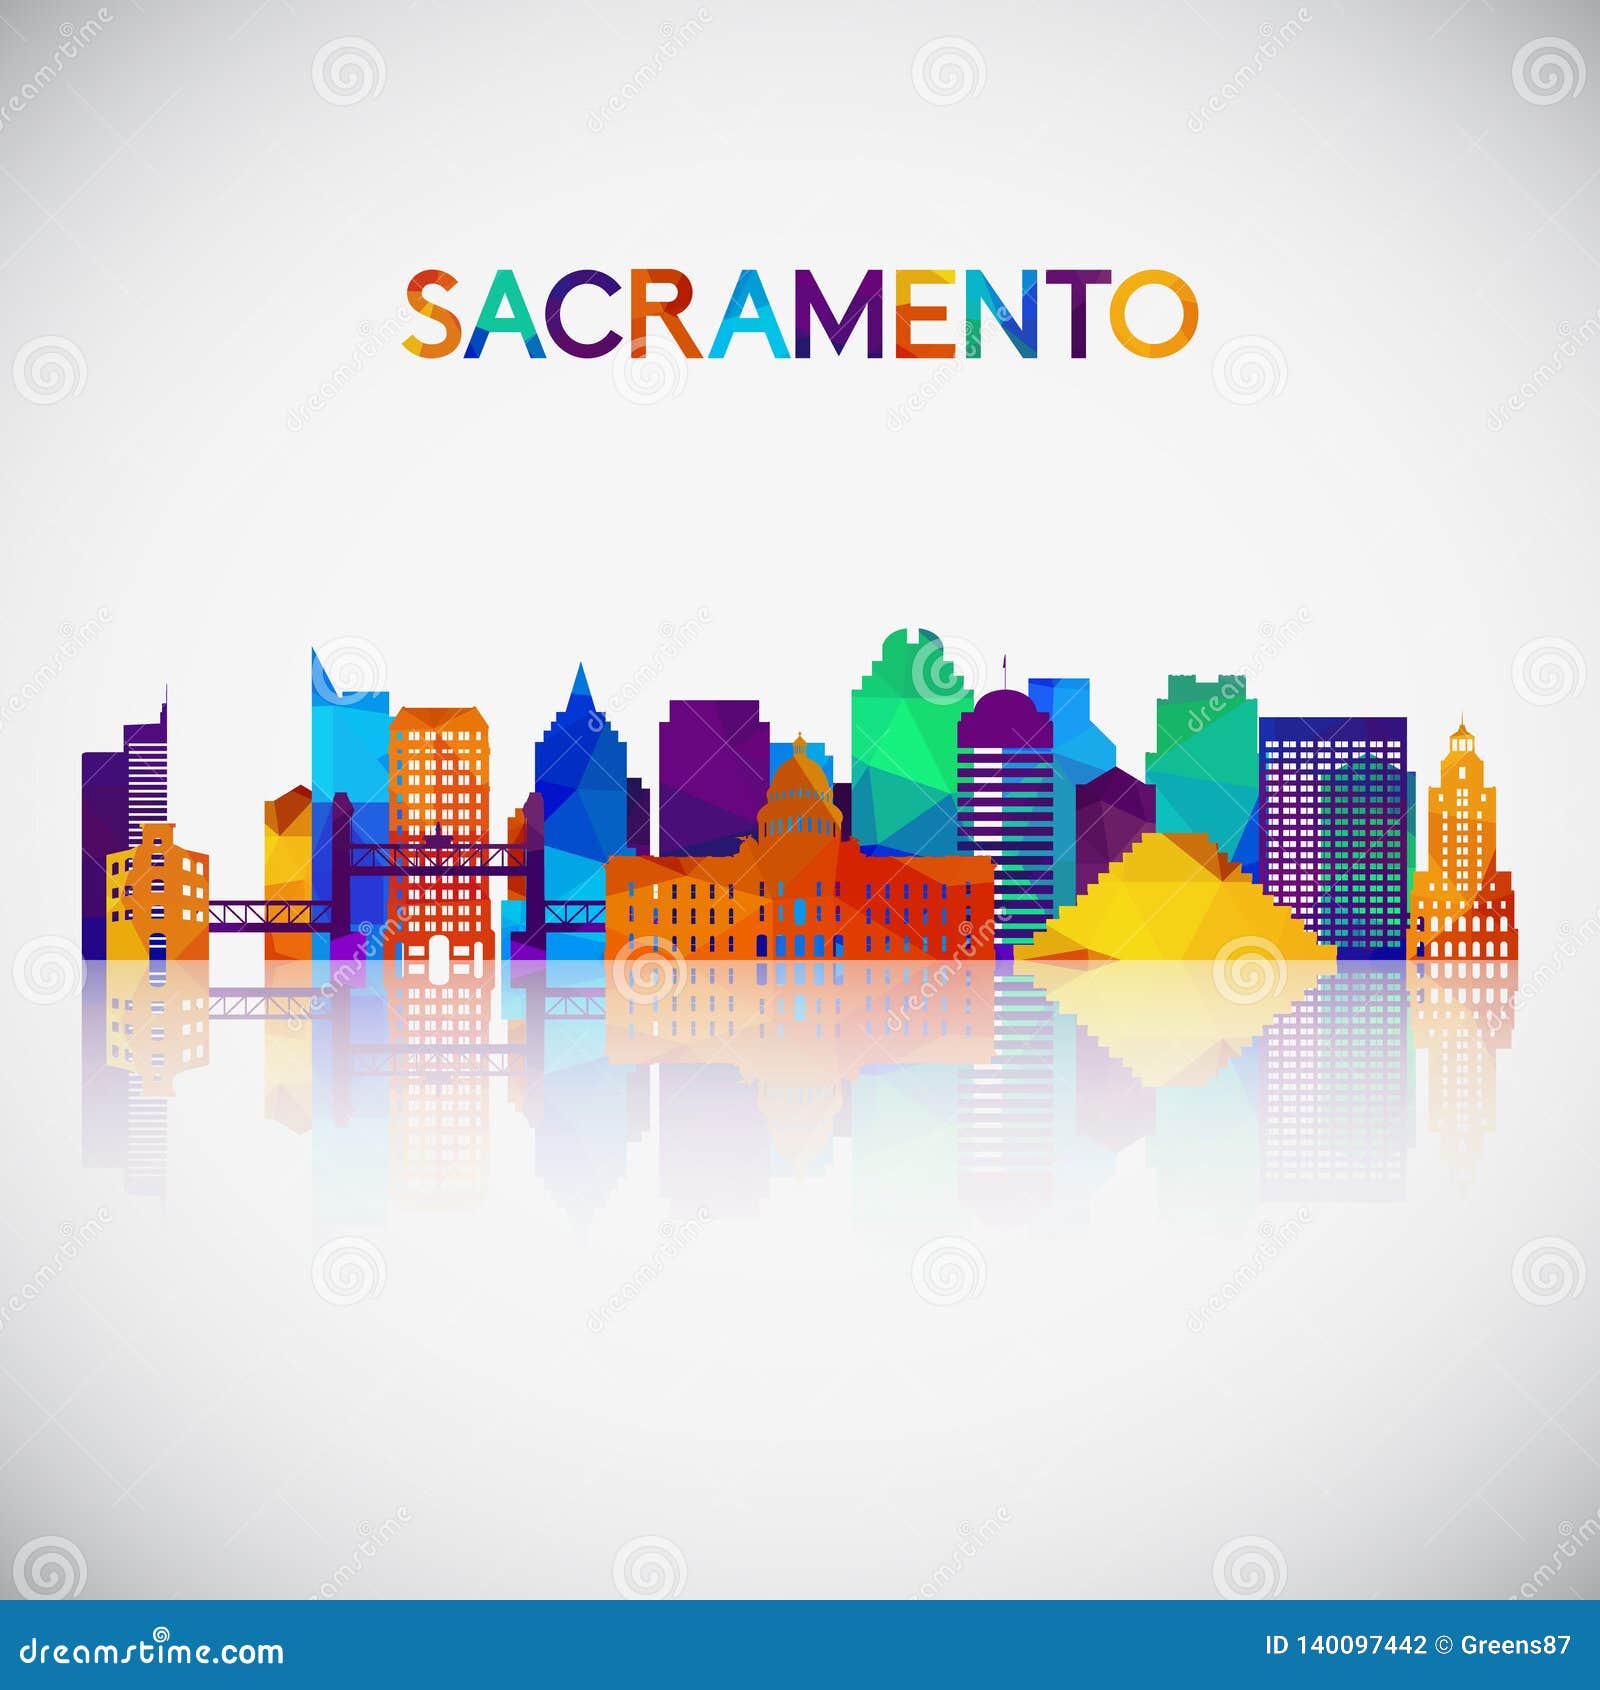 sacramento skyline silhouette in colorful geometric style.